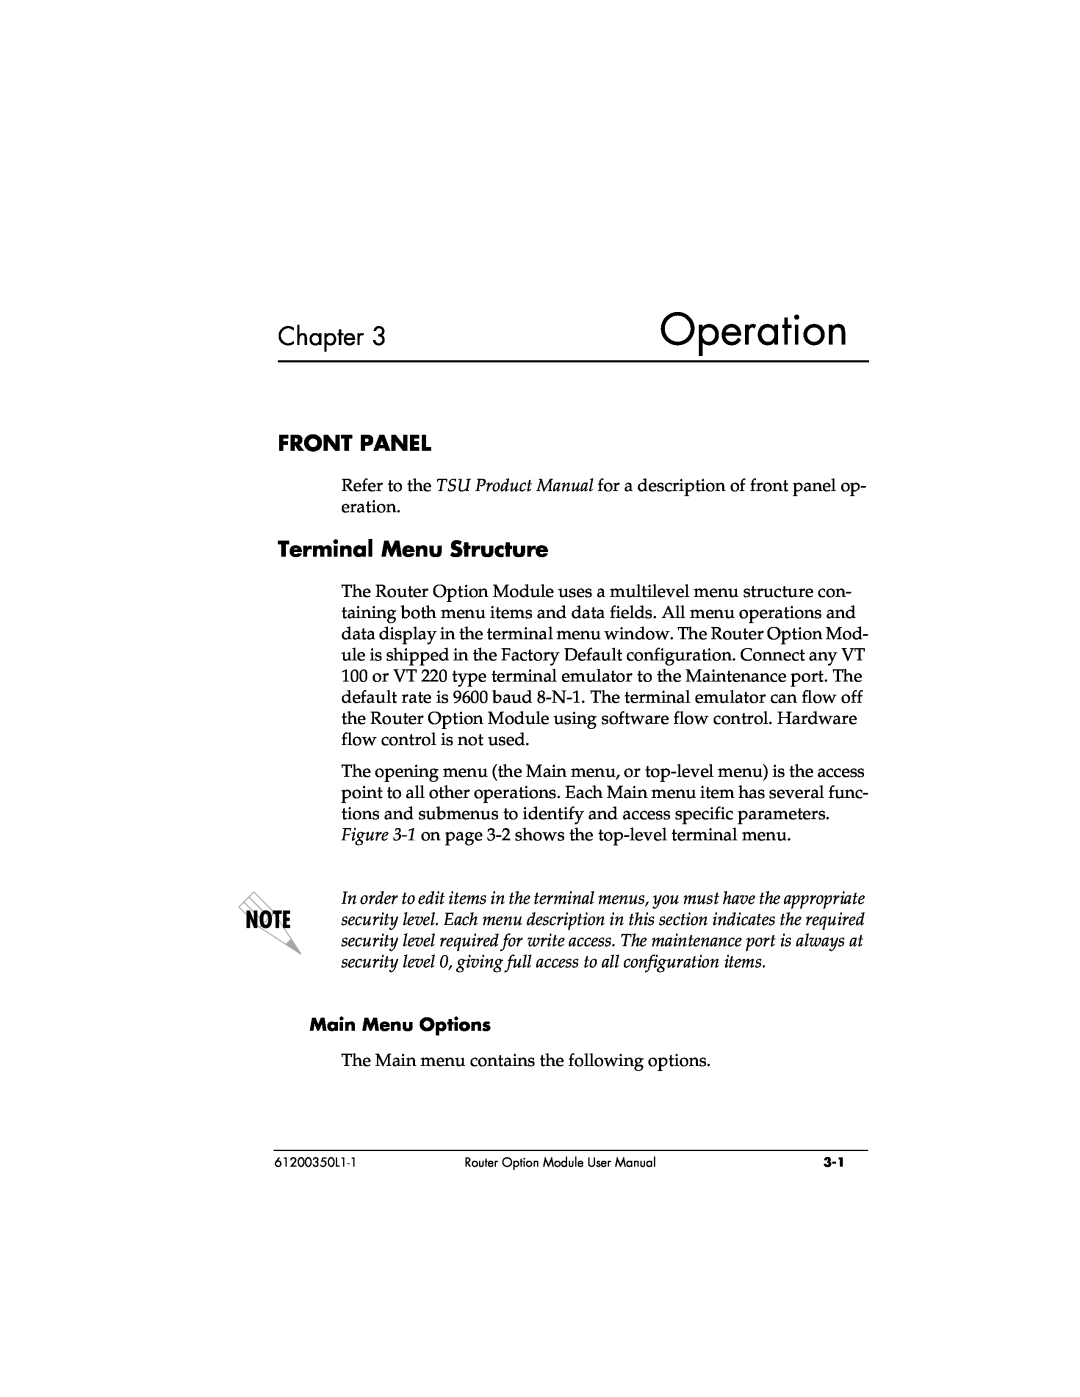 ADTRAN 1200350L1 user manual Operation, Front Panel, Terminal Menu Structure, Main Menu Options, Chapter 